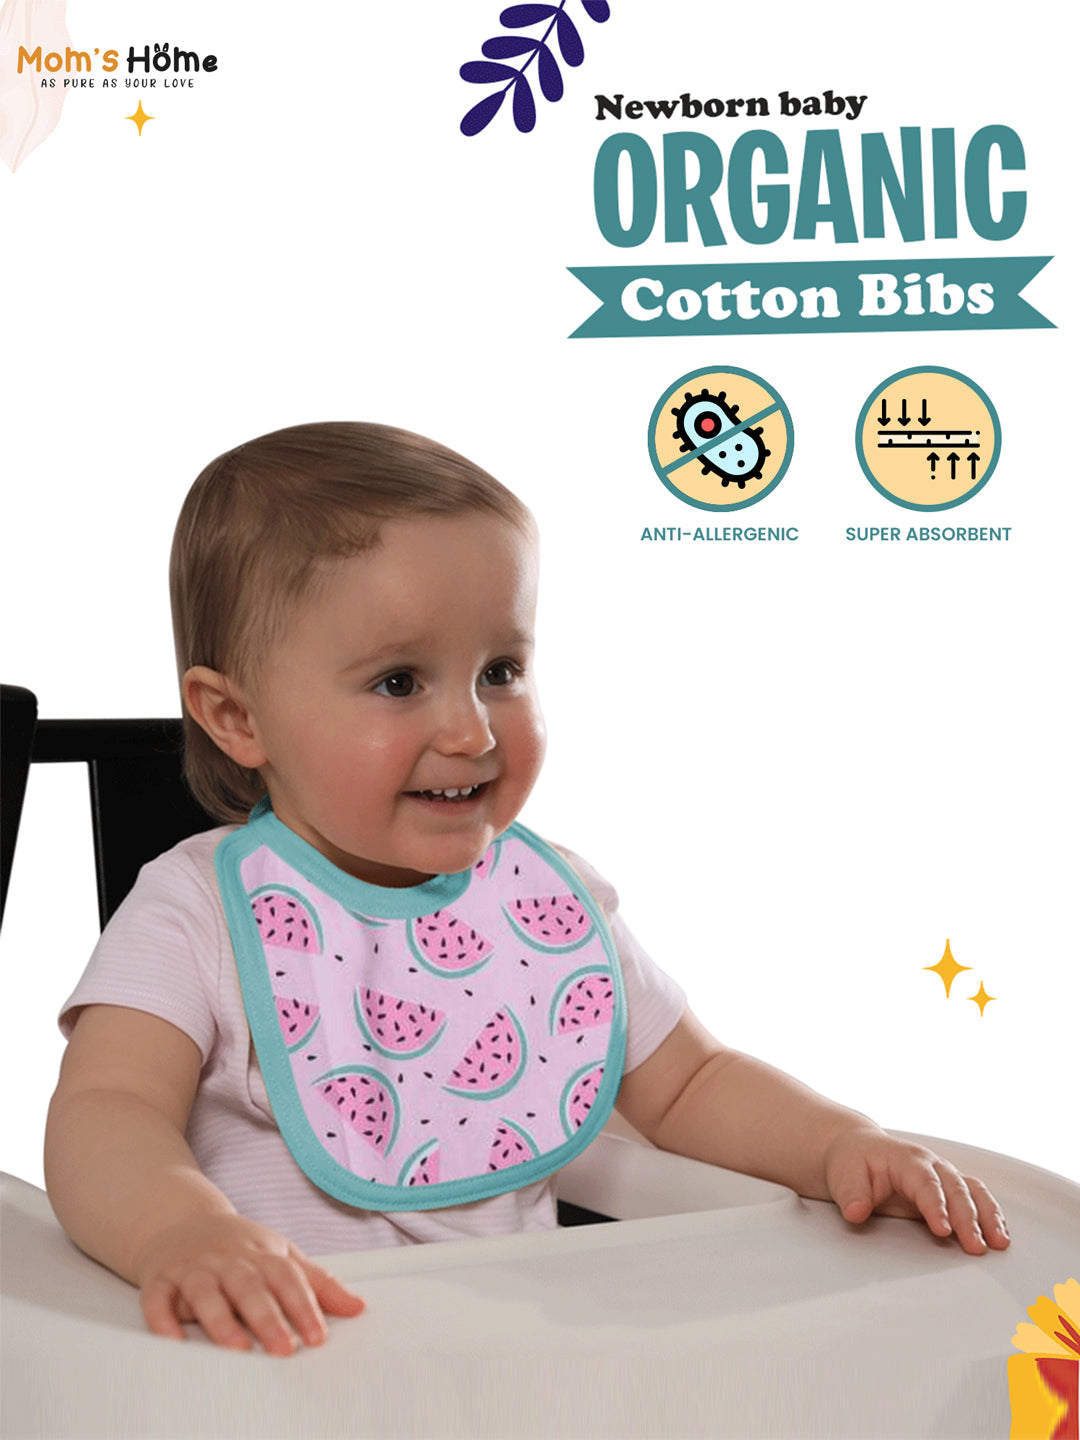 Moms Home Organic Cotton Baby Full Length Winter Romper Gift Set 14 - Red